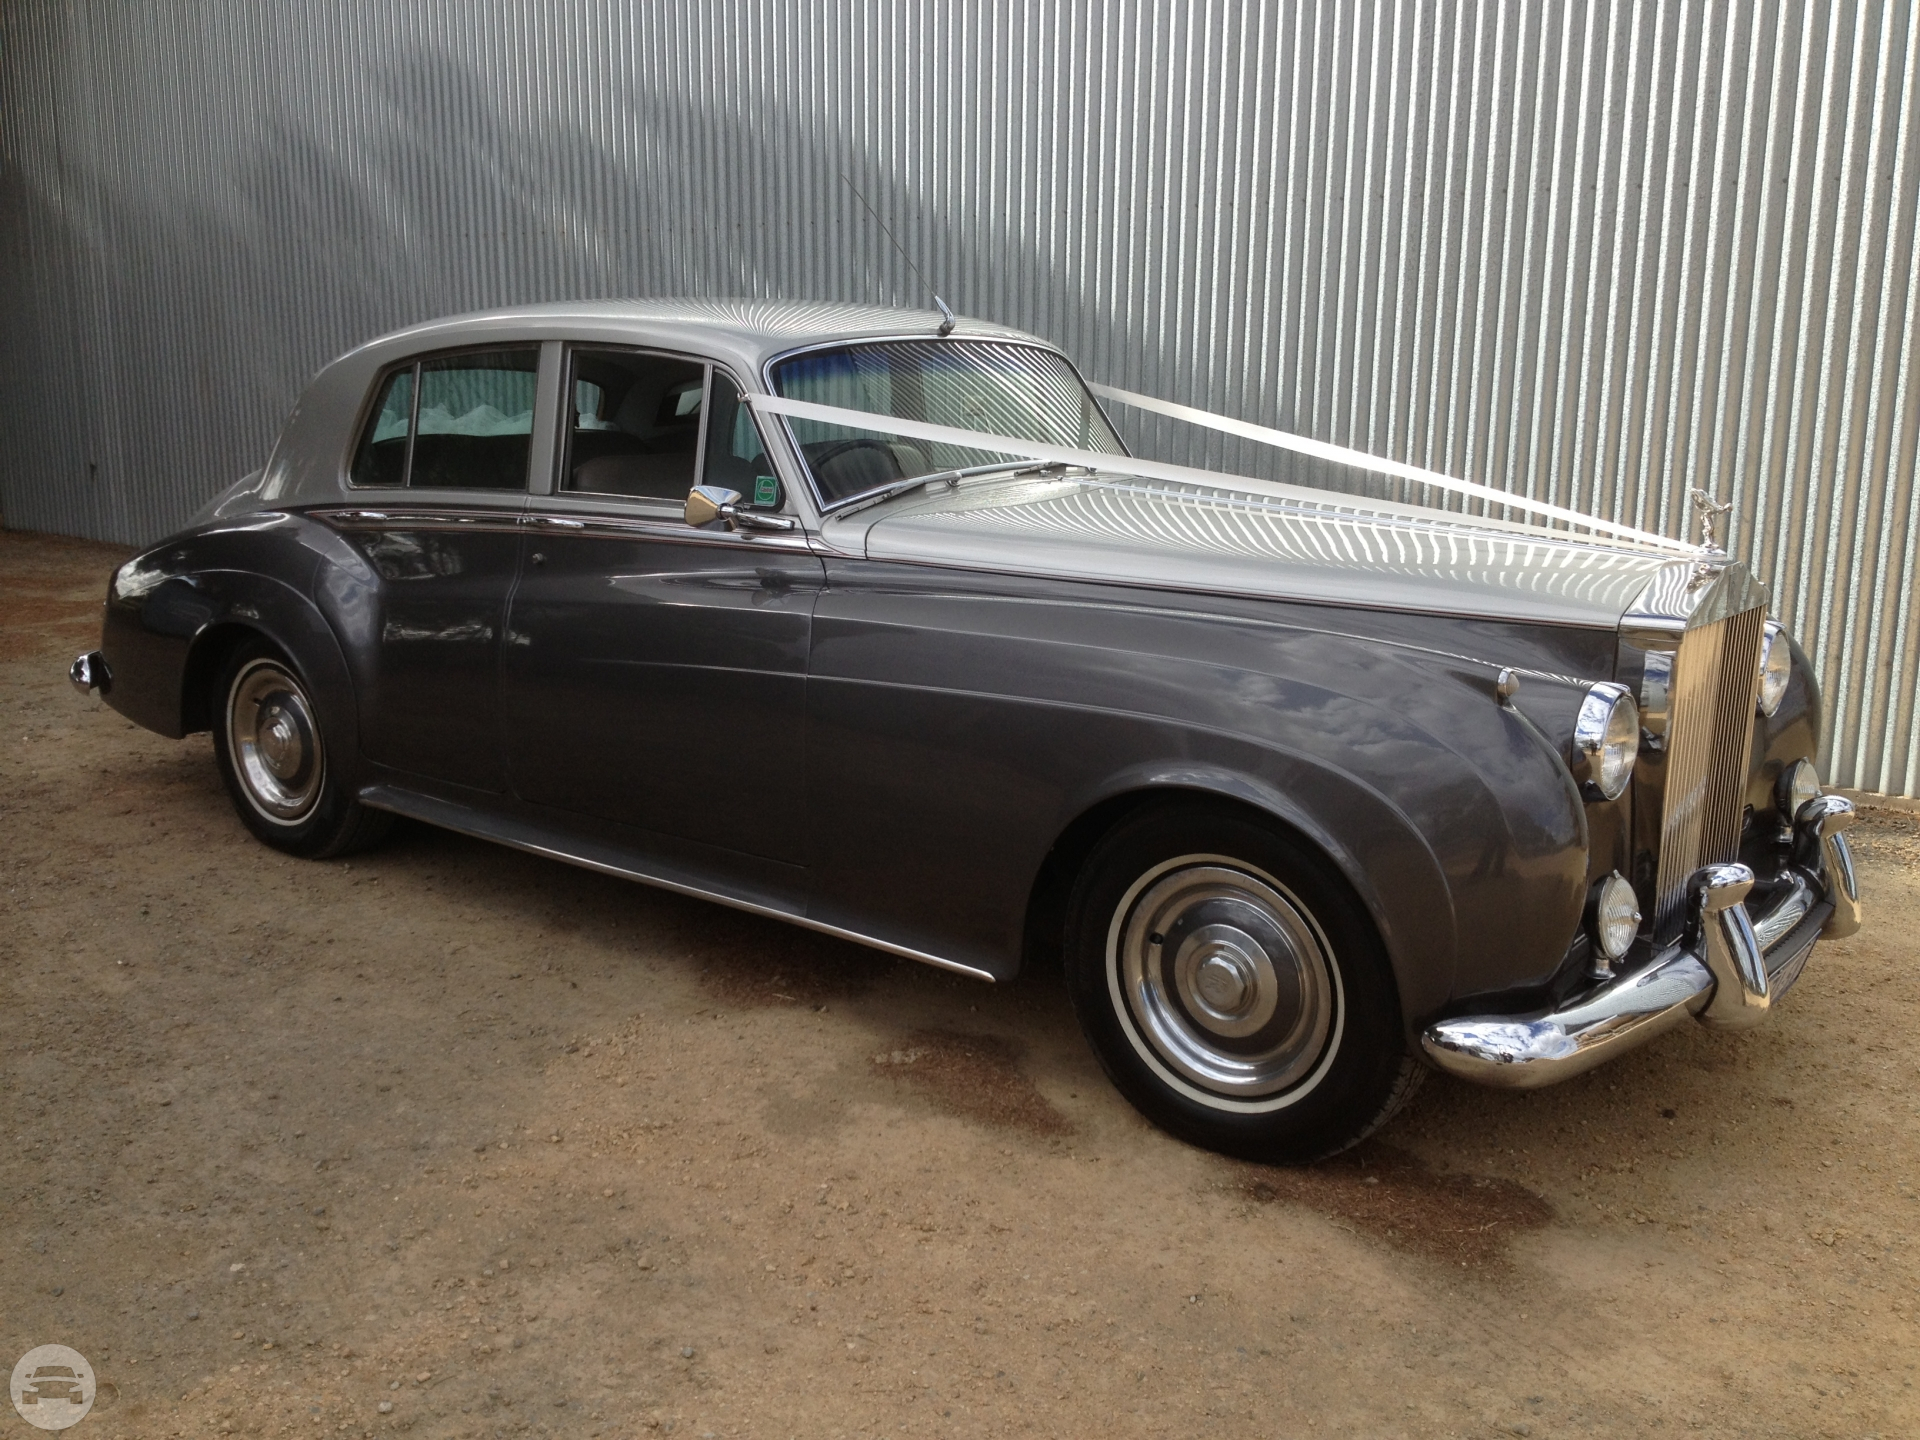 1958 Rolls Royce Silver Cloud 1
Sedan /
Gawler East SA 5118, Australia

 / Hourly AUD$ 200.00
